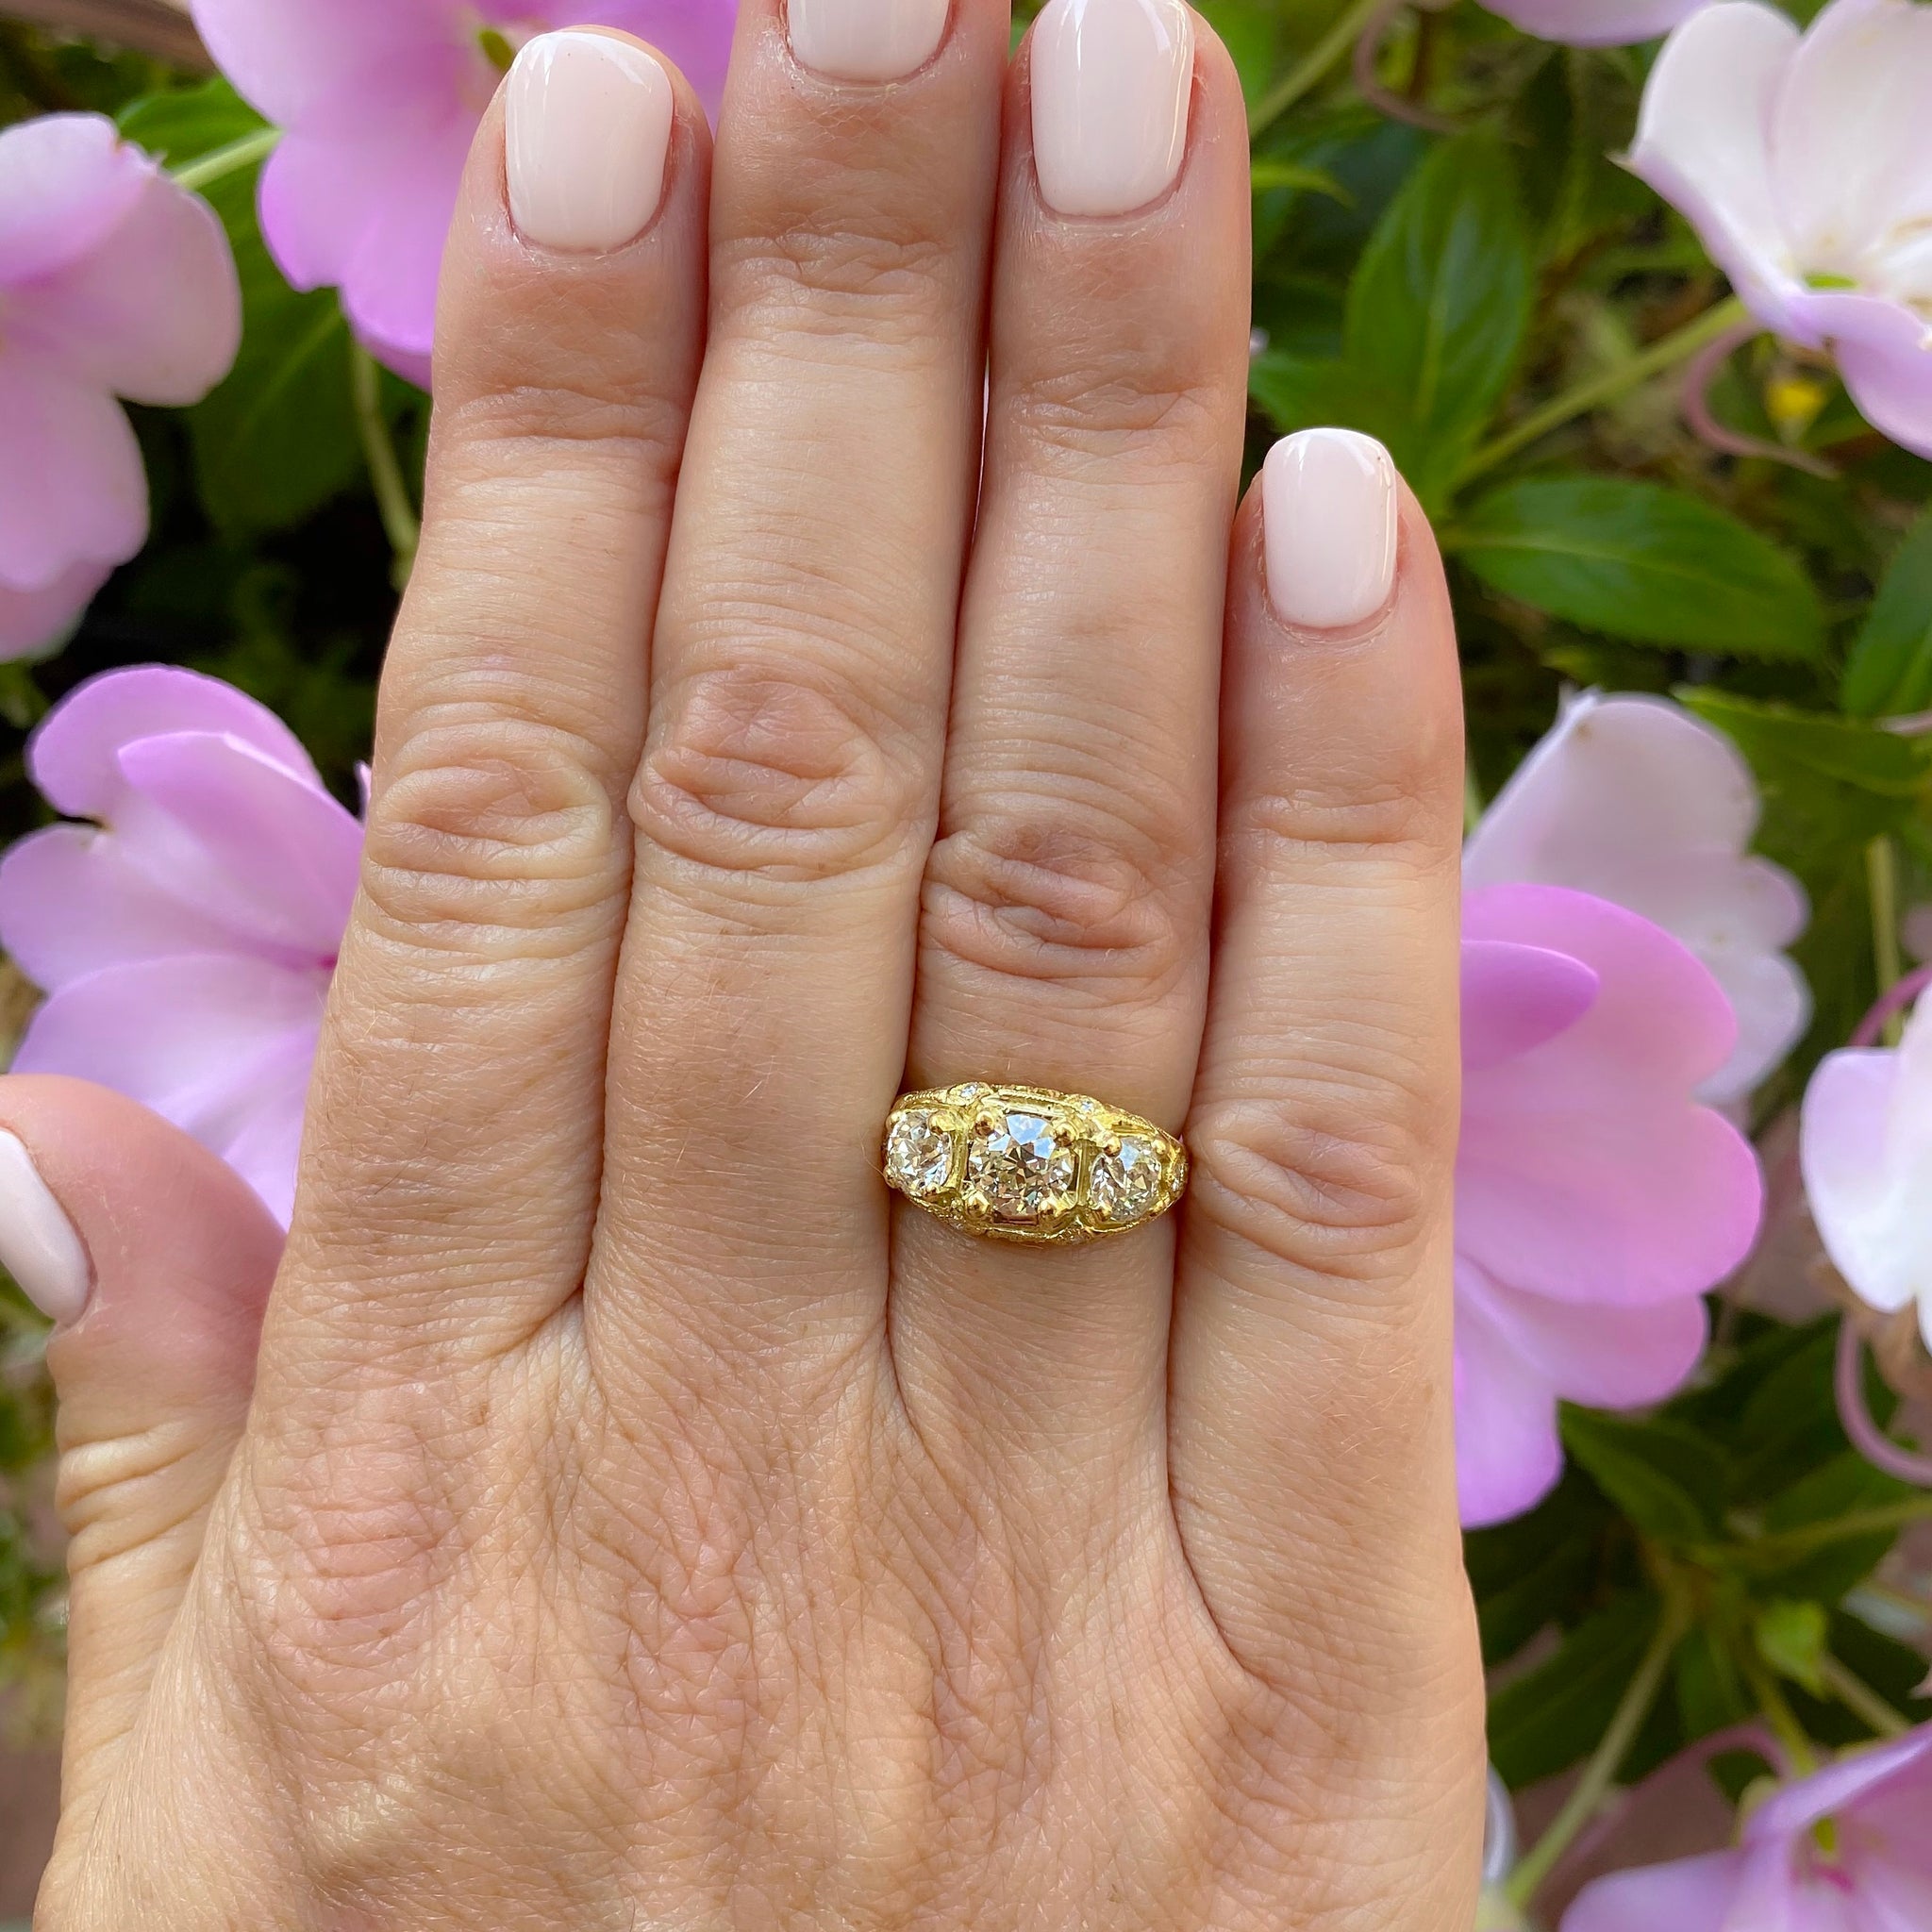 Kollam Supreme Premium Fashion Jewellery - Stone Finger Ring. To Buy Click  https://www.kollamsupremeonline.com/2669-stunning-multi-colour-stone-finger- ring.html #jewellery #goldplated #fingerring #stonejewellery #rings  #imitation #artificial ...